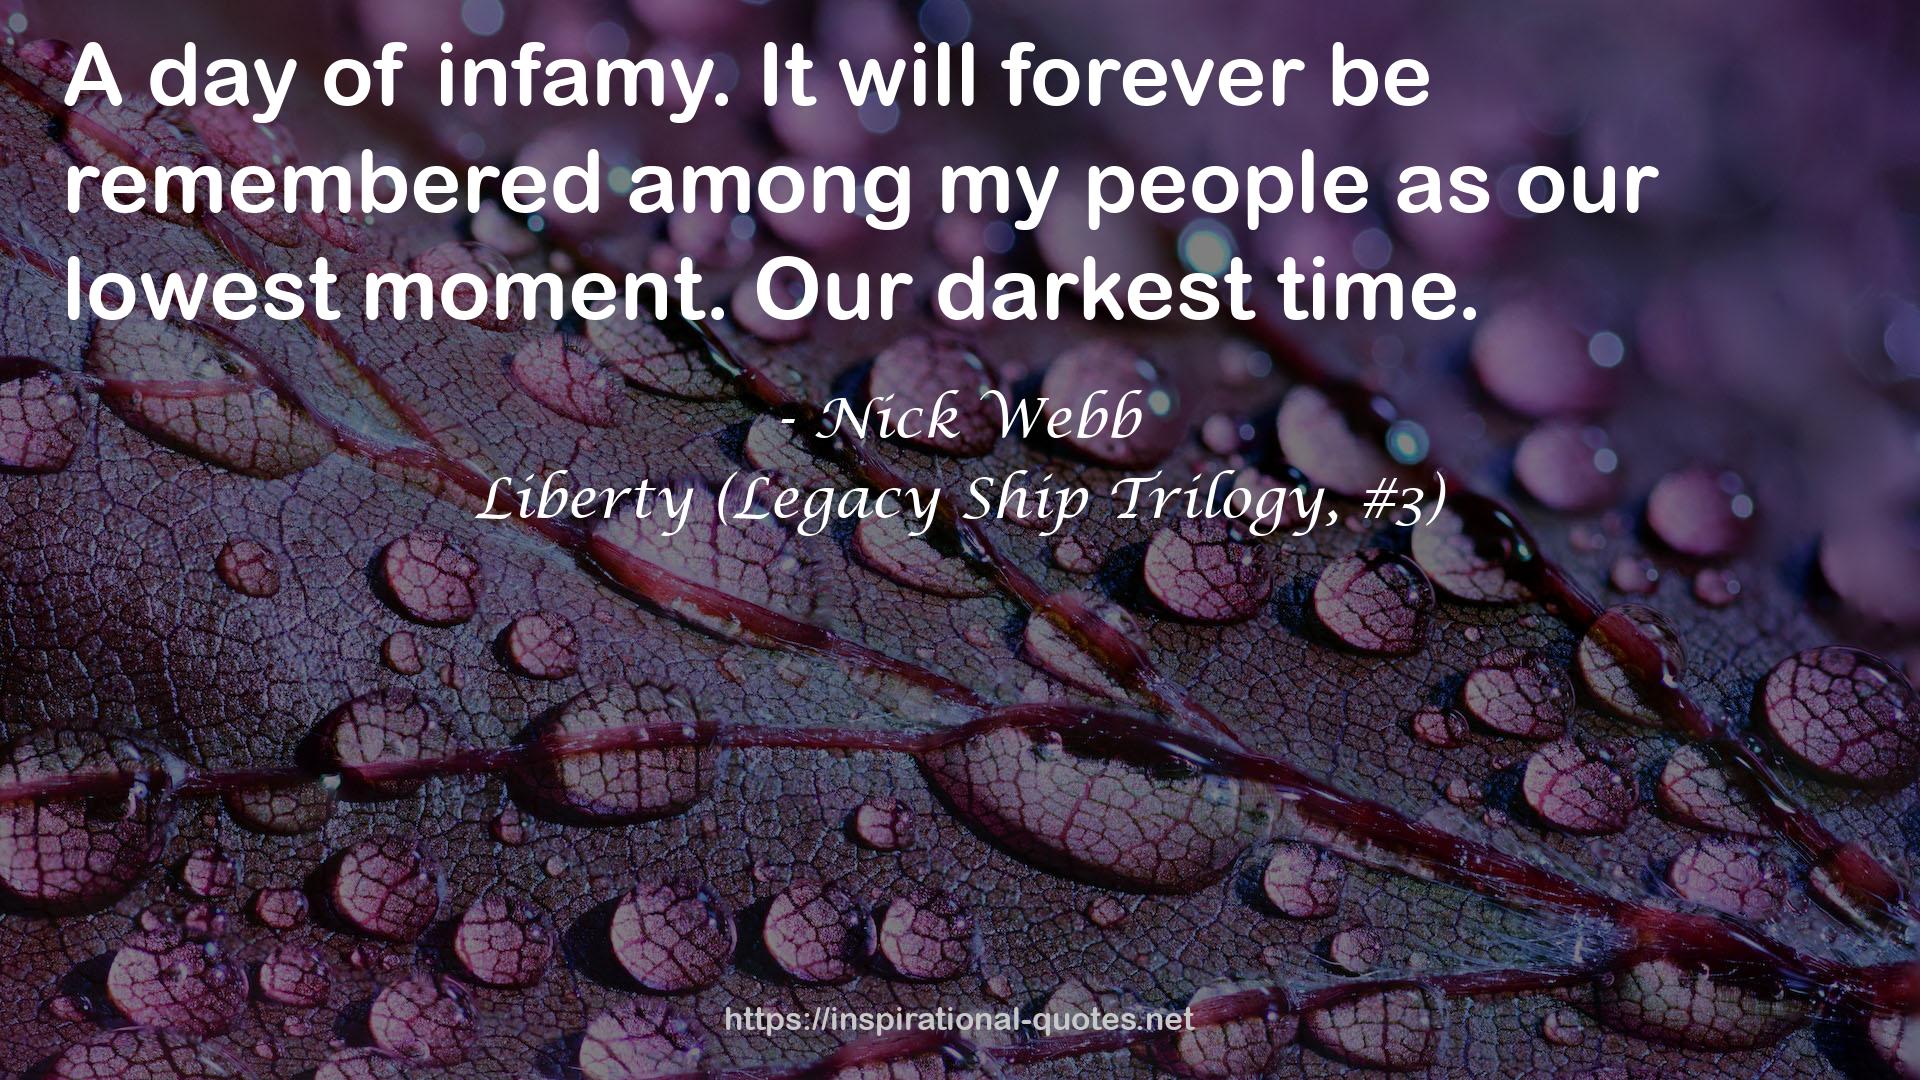 Liberty (Legacy Ship Trilogy, #3) QUOTES